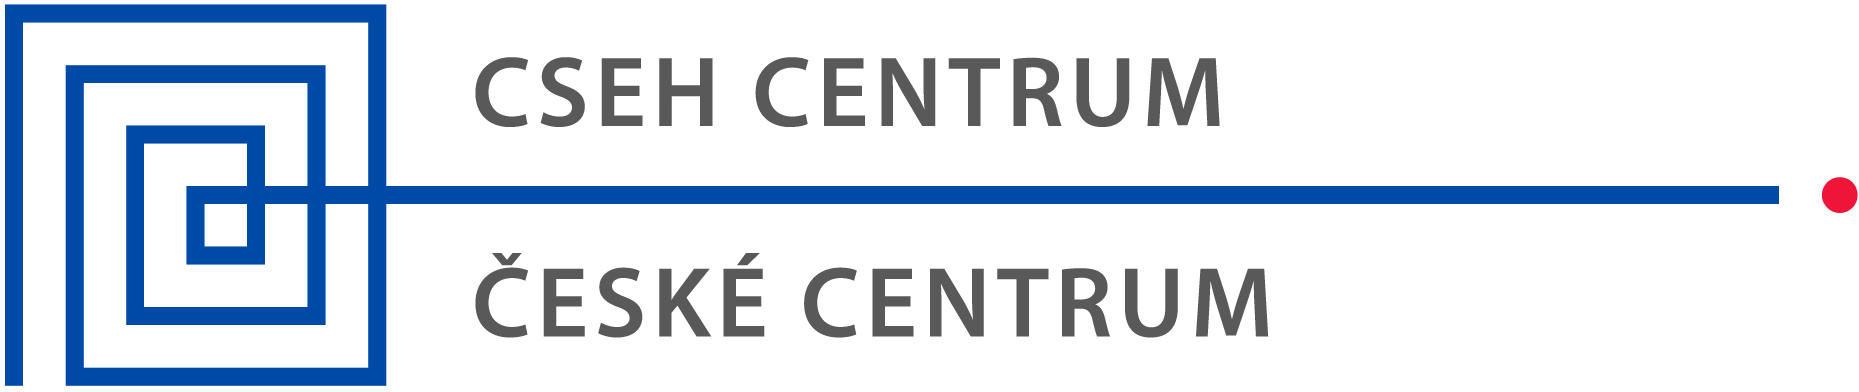 Cseh Centrum logo